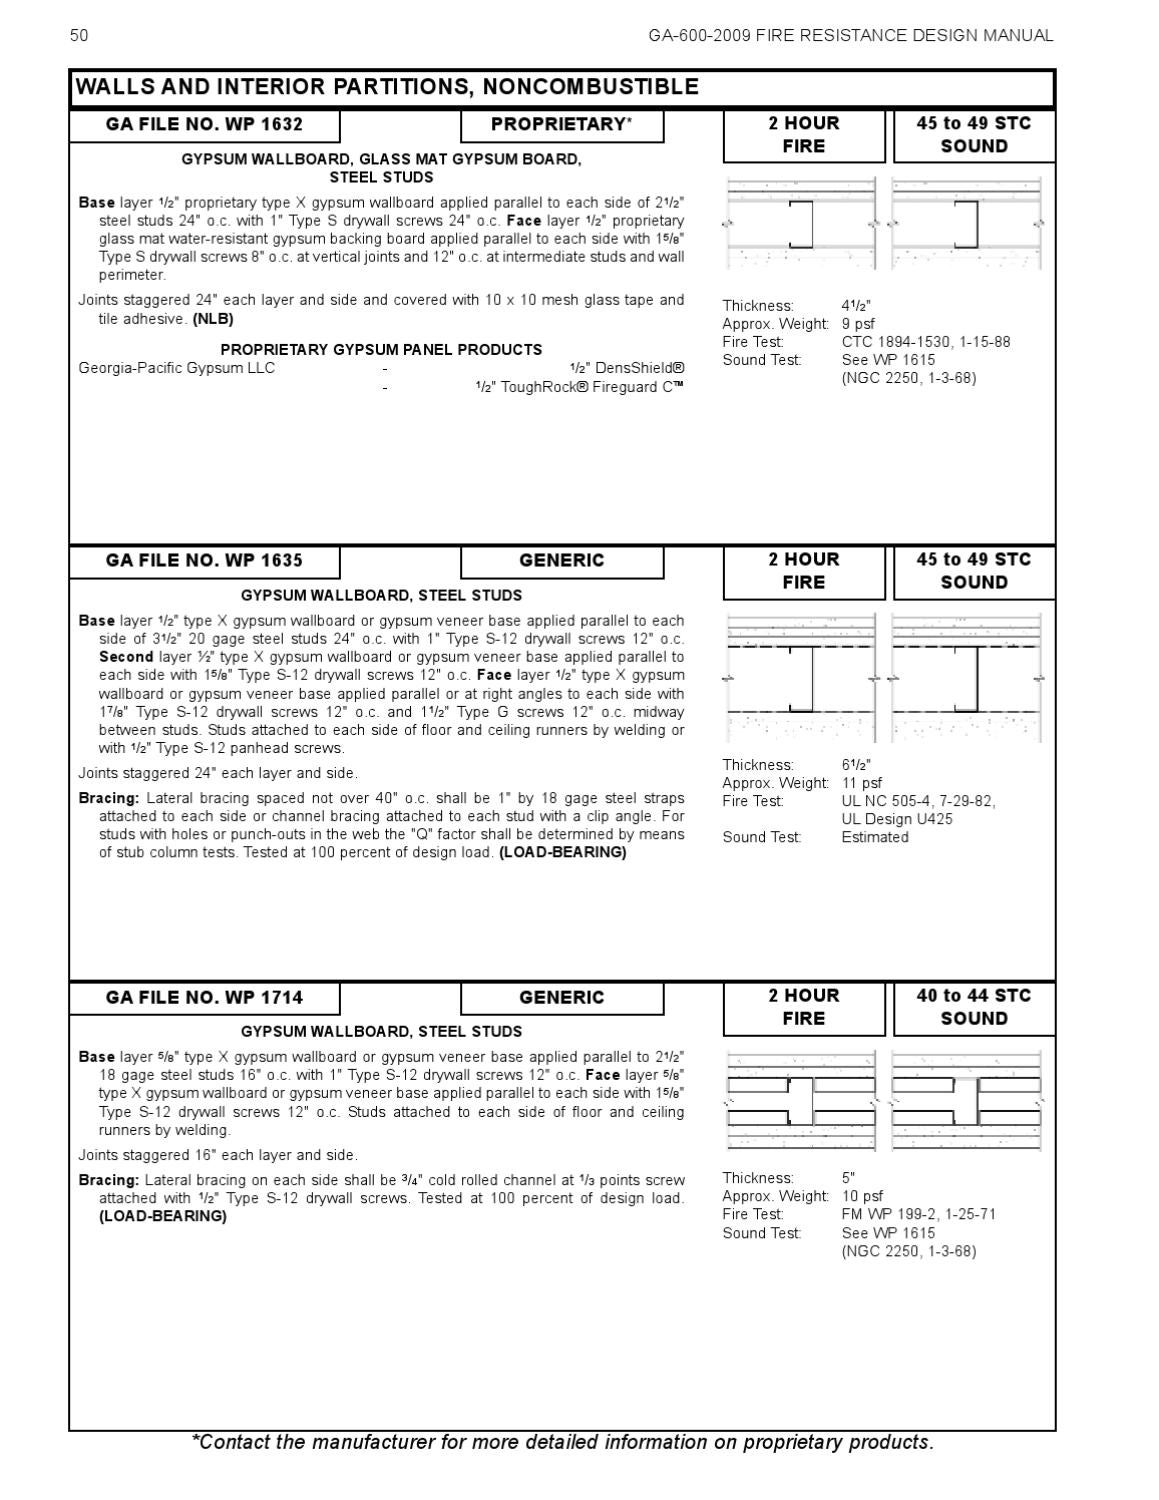 fire resistance design manual pdf